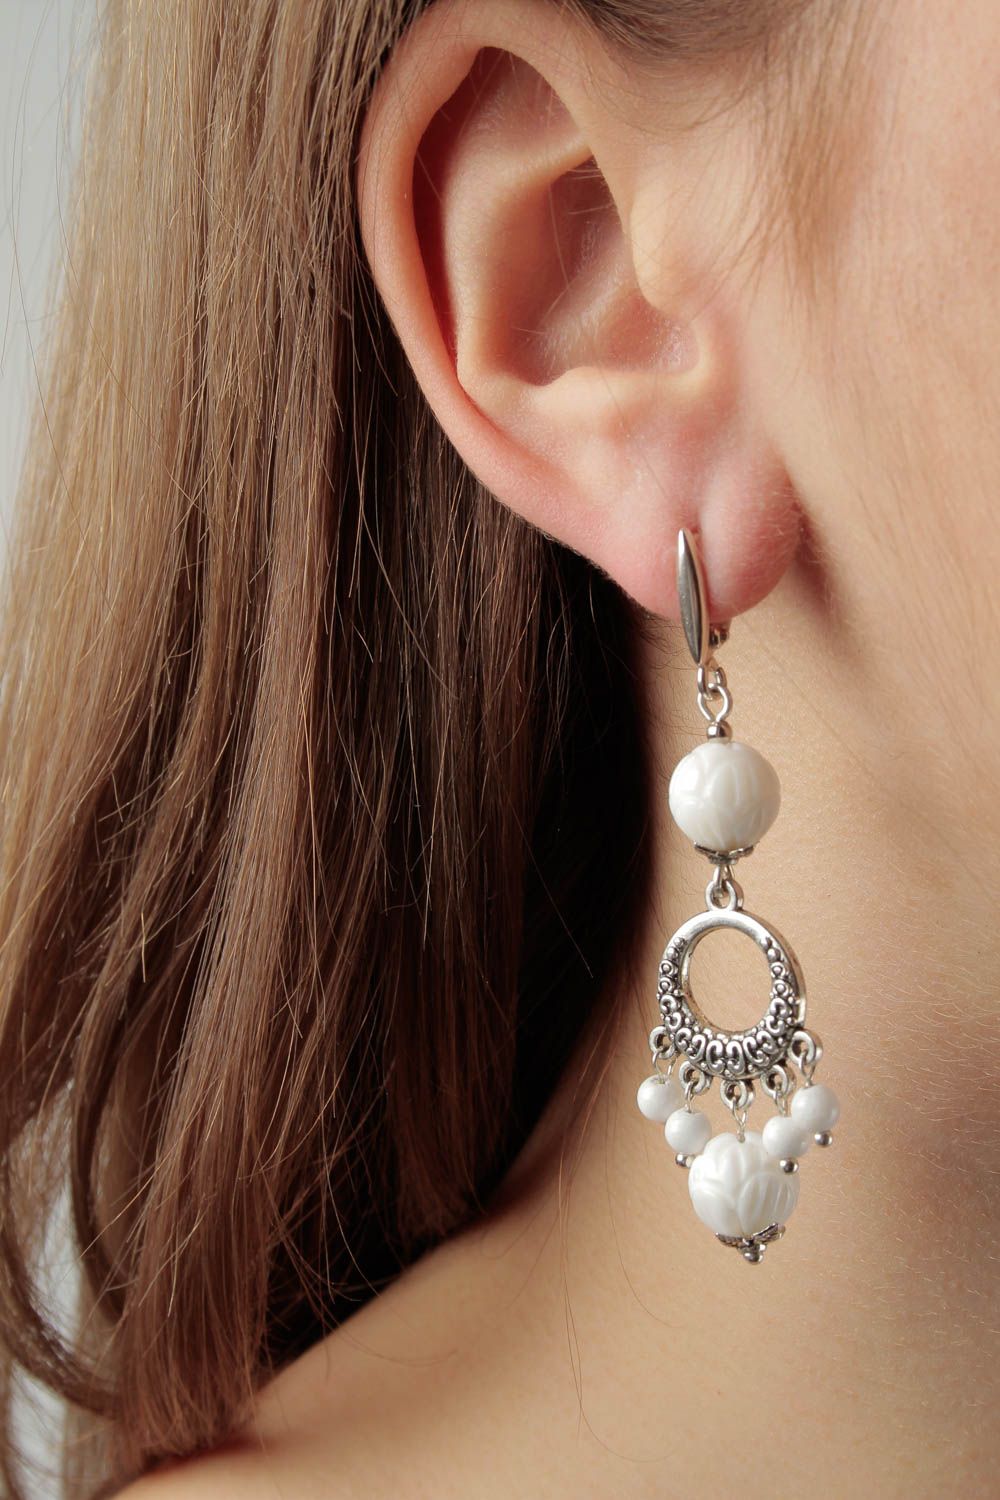 Handmade massive earrings jewelry with natural stone unusual earrings photo 1